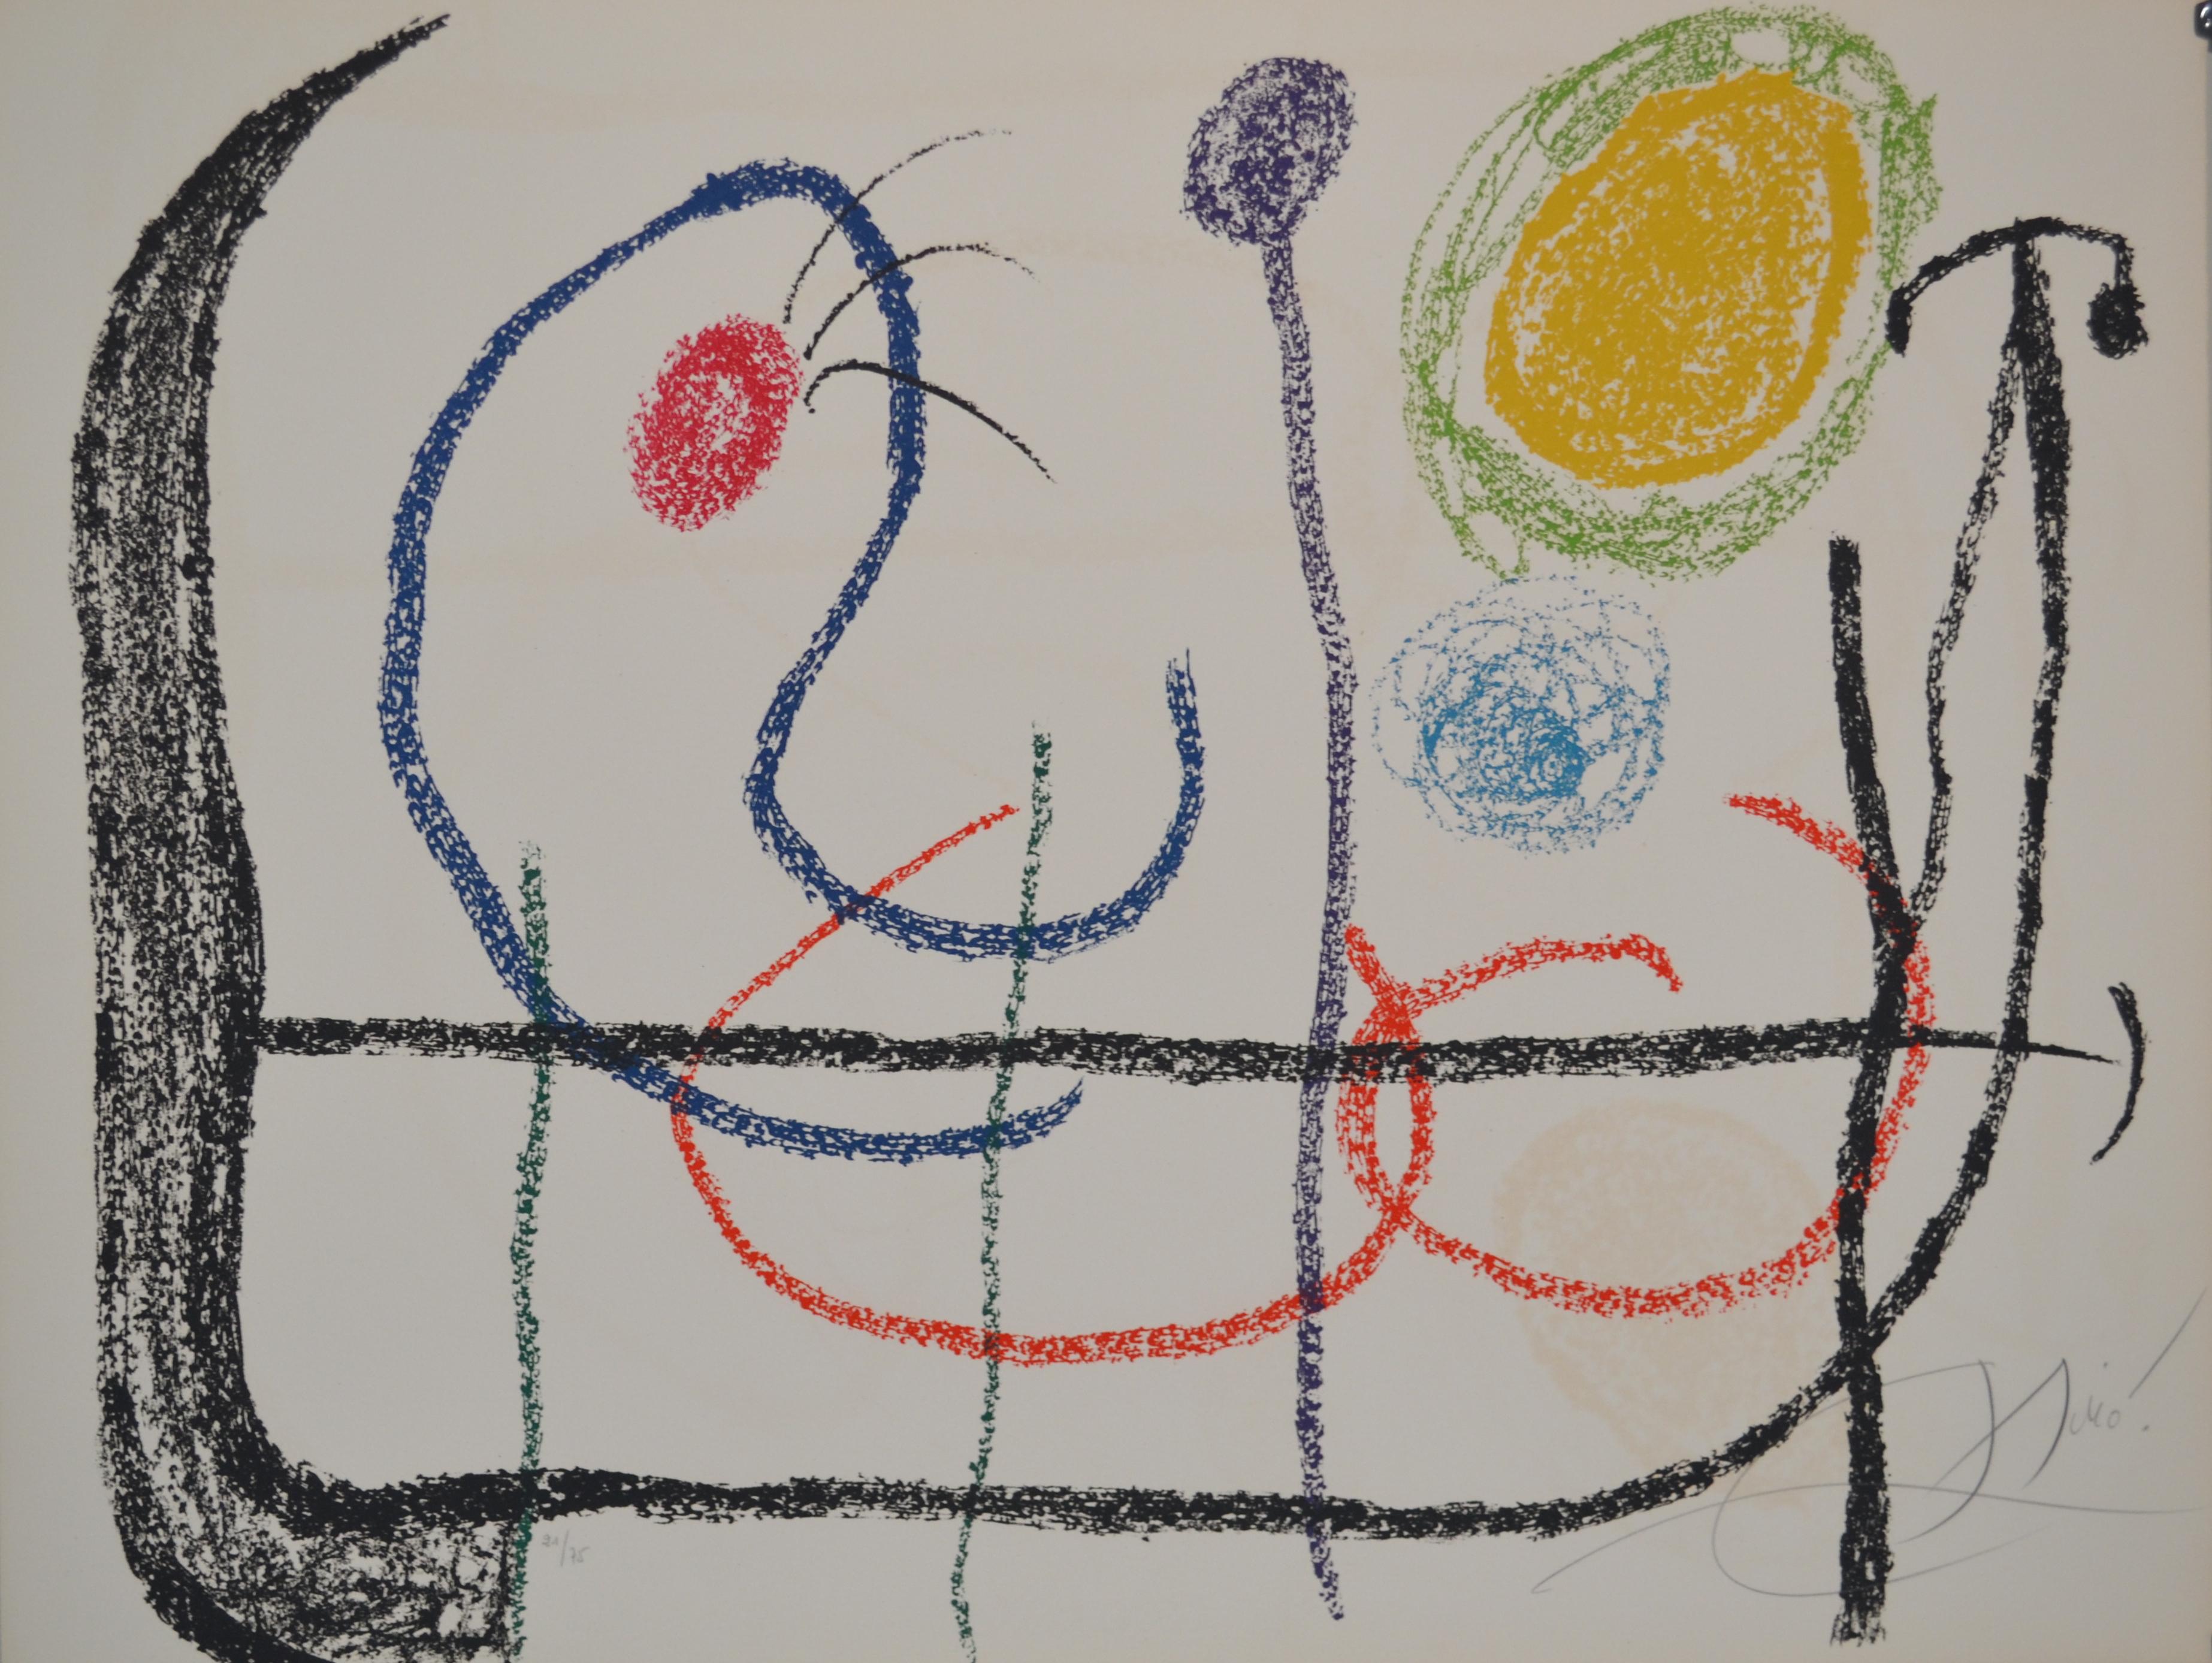 Untitled, from Album 21 portfolio - M1136 - Print by Joan Miró